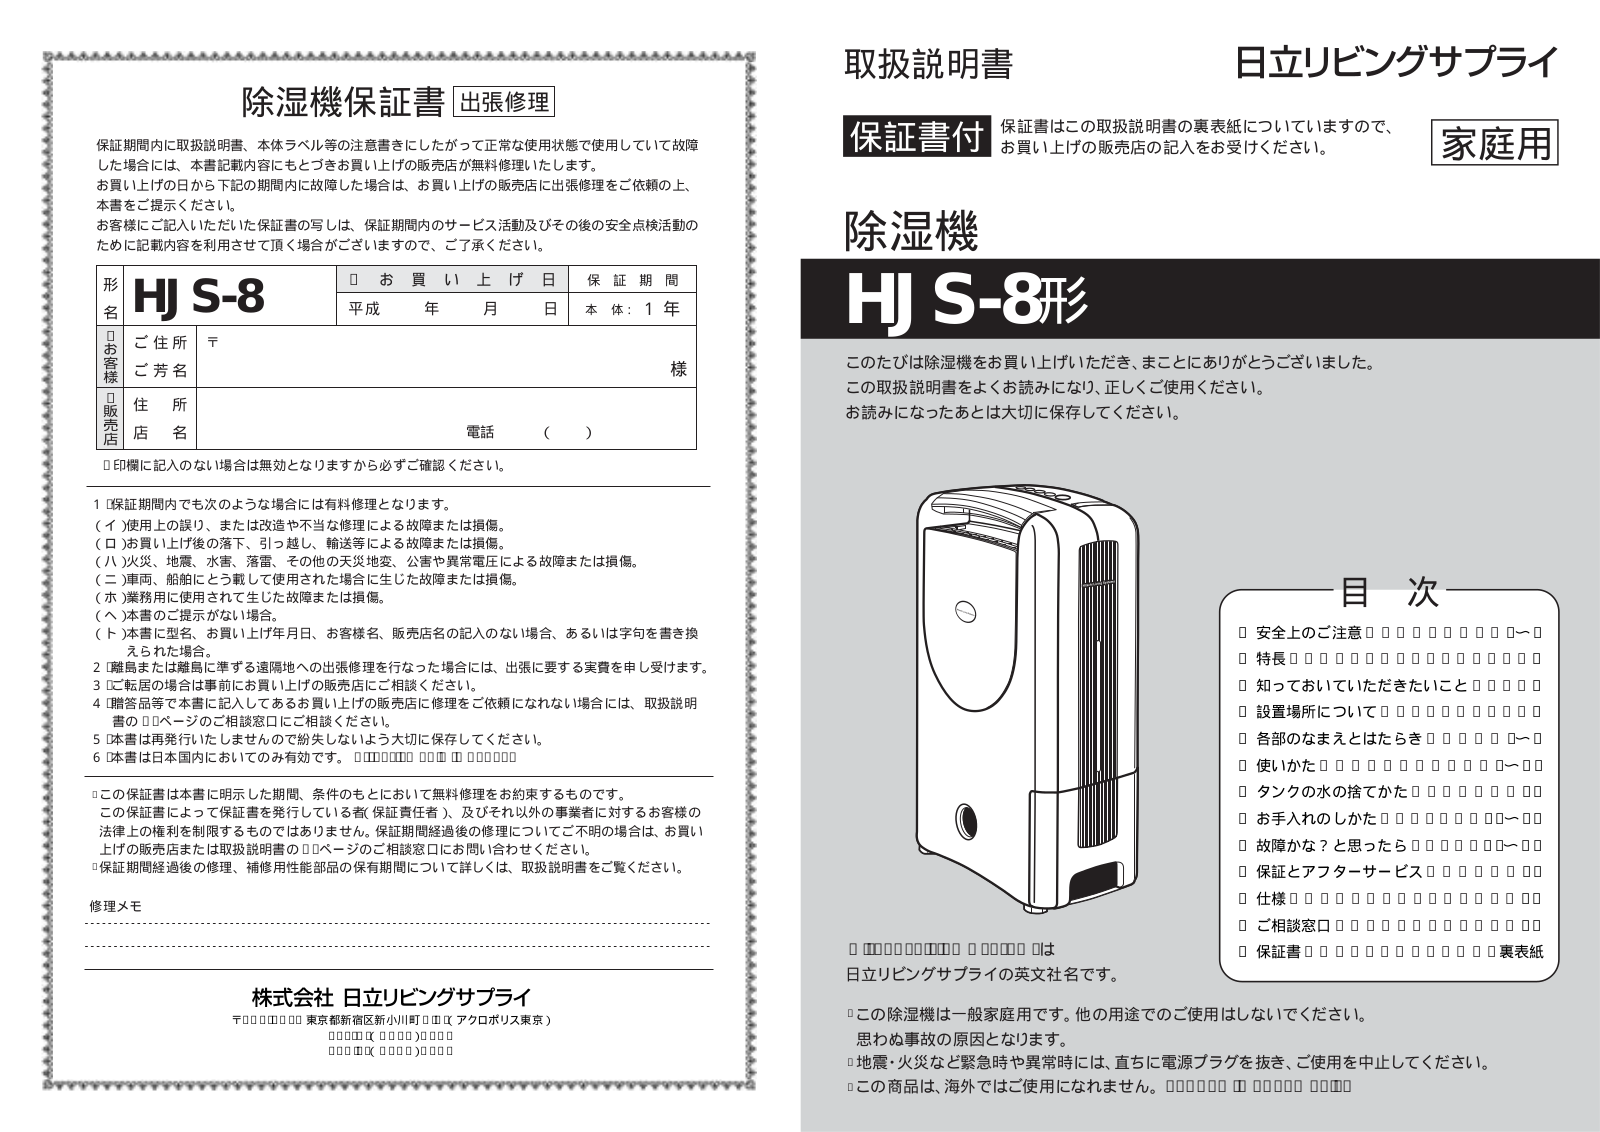 HITACHI HJS-8 User Manual